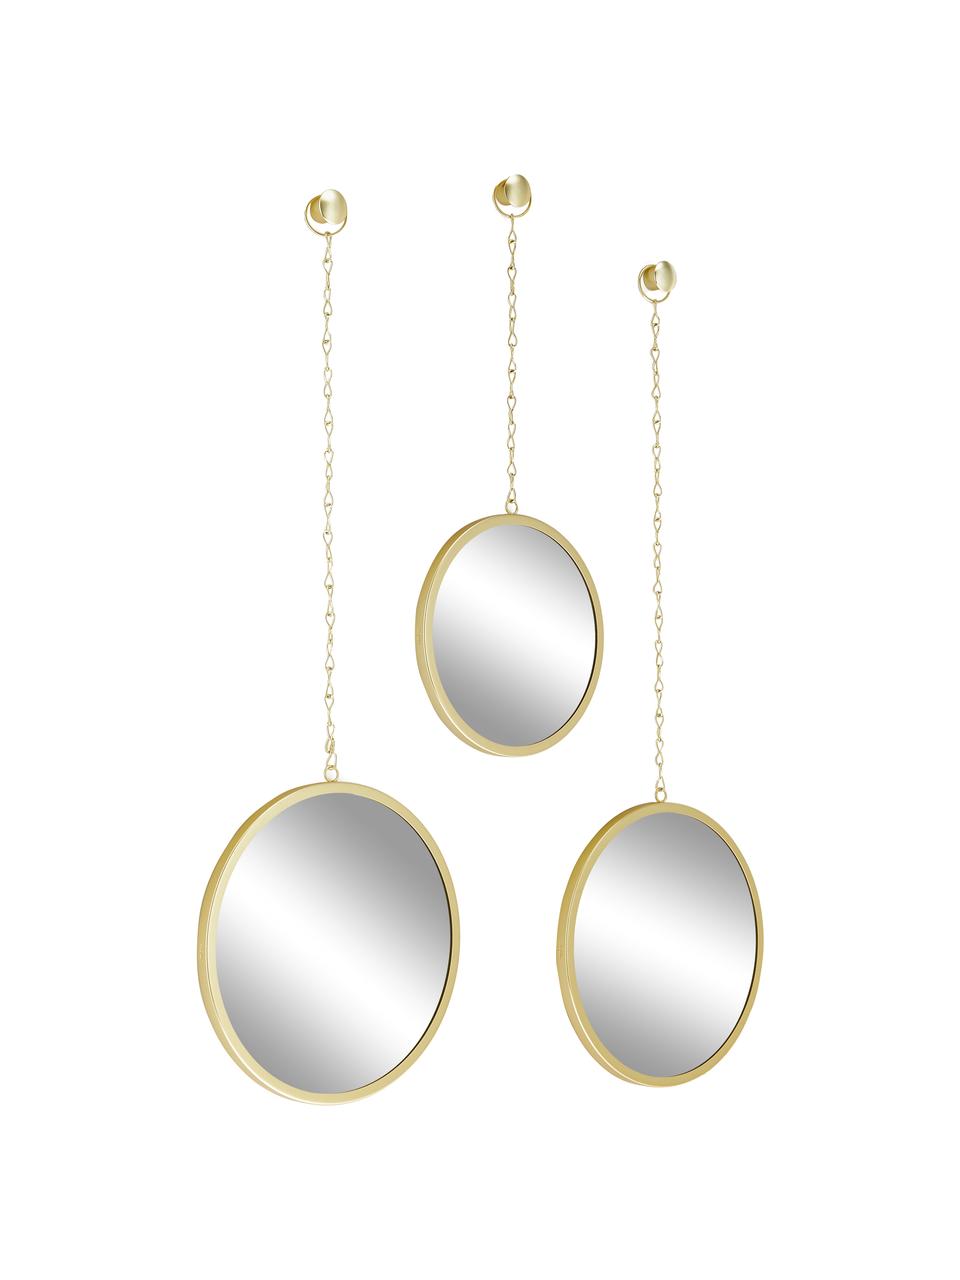 Sada nástěnných zrcadel Dima, 3 díly, Zlatá, Sada s různými velikostmi